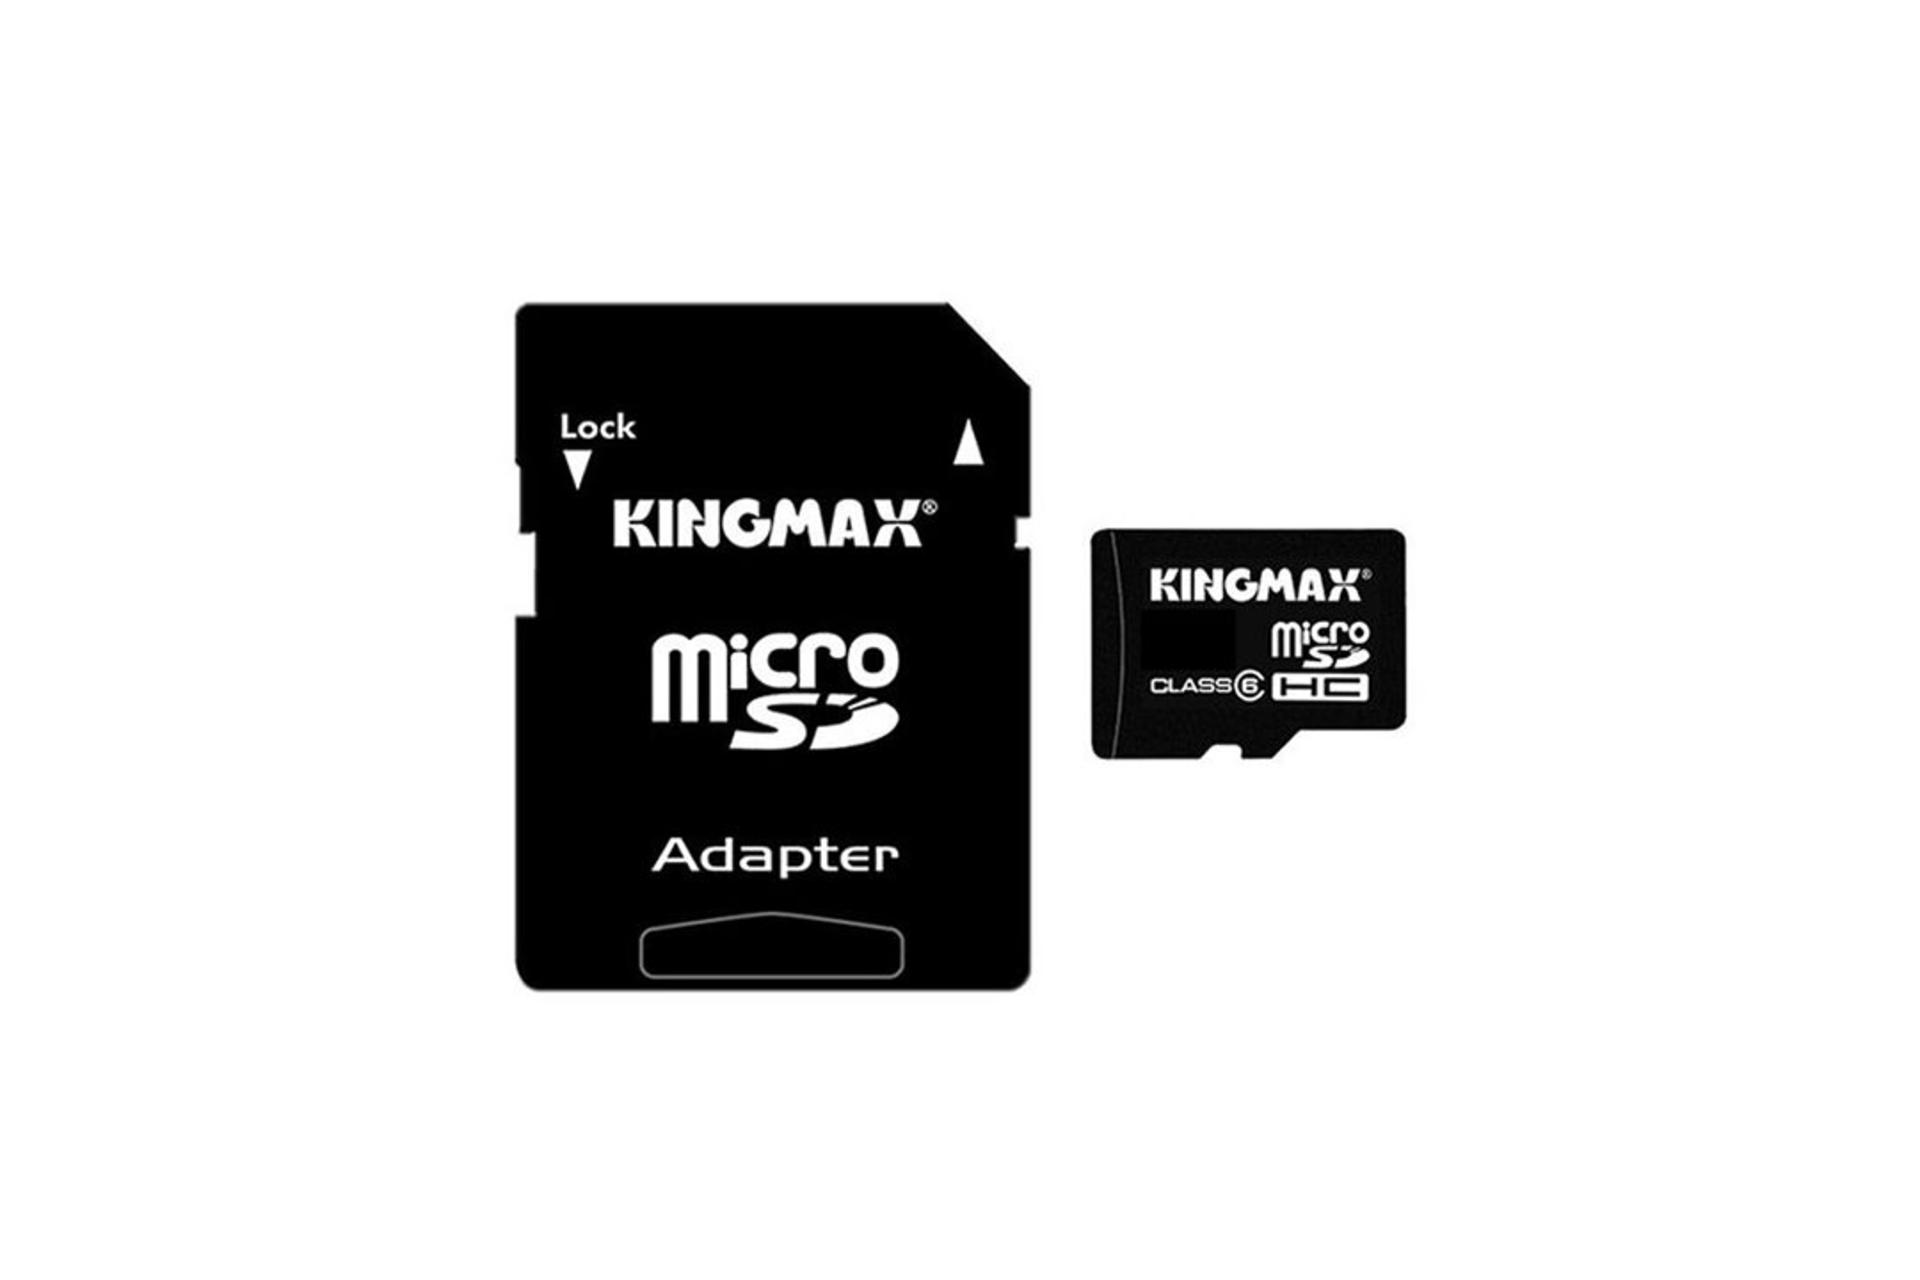 Kingmax microSDHC Class 6 4GB